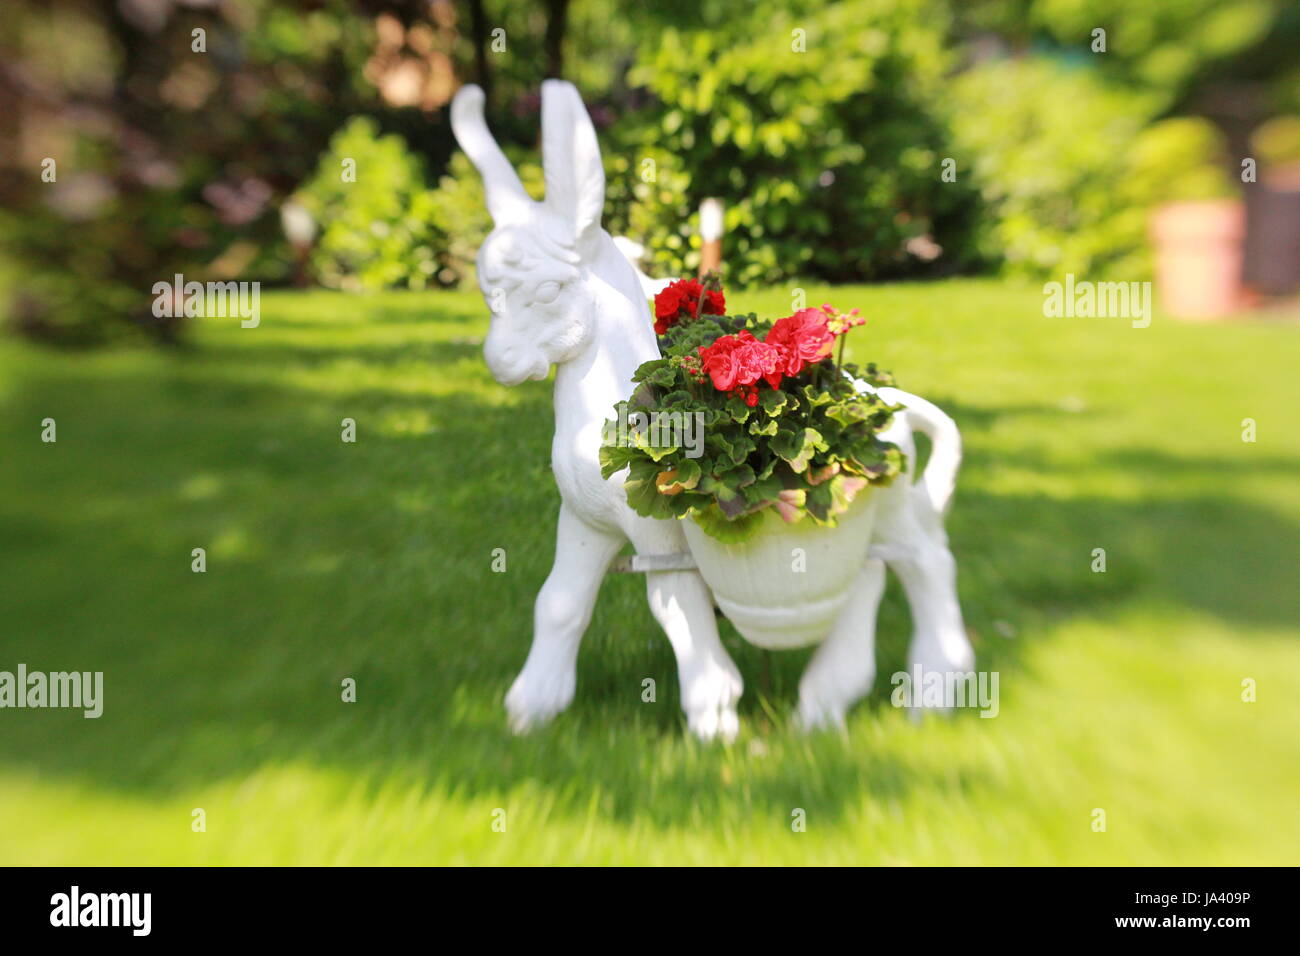 garden, flower, flowers, plant, decor, donkey, gardens, garden, flower, Stock Photo